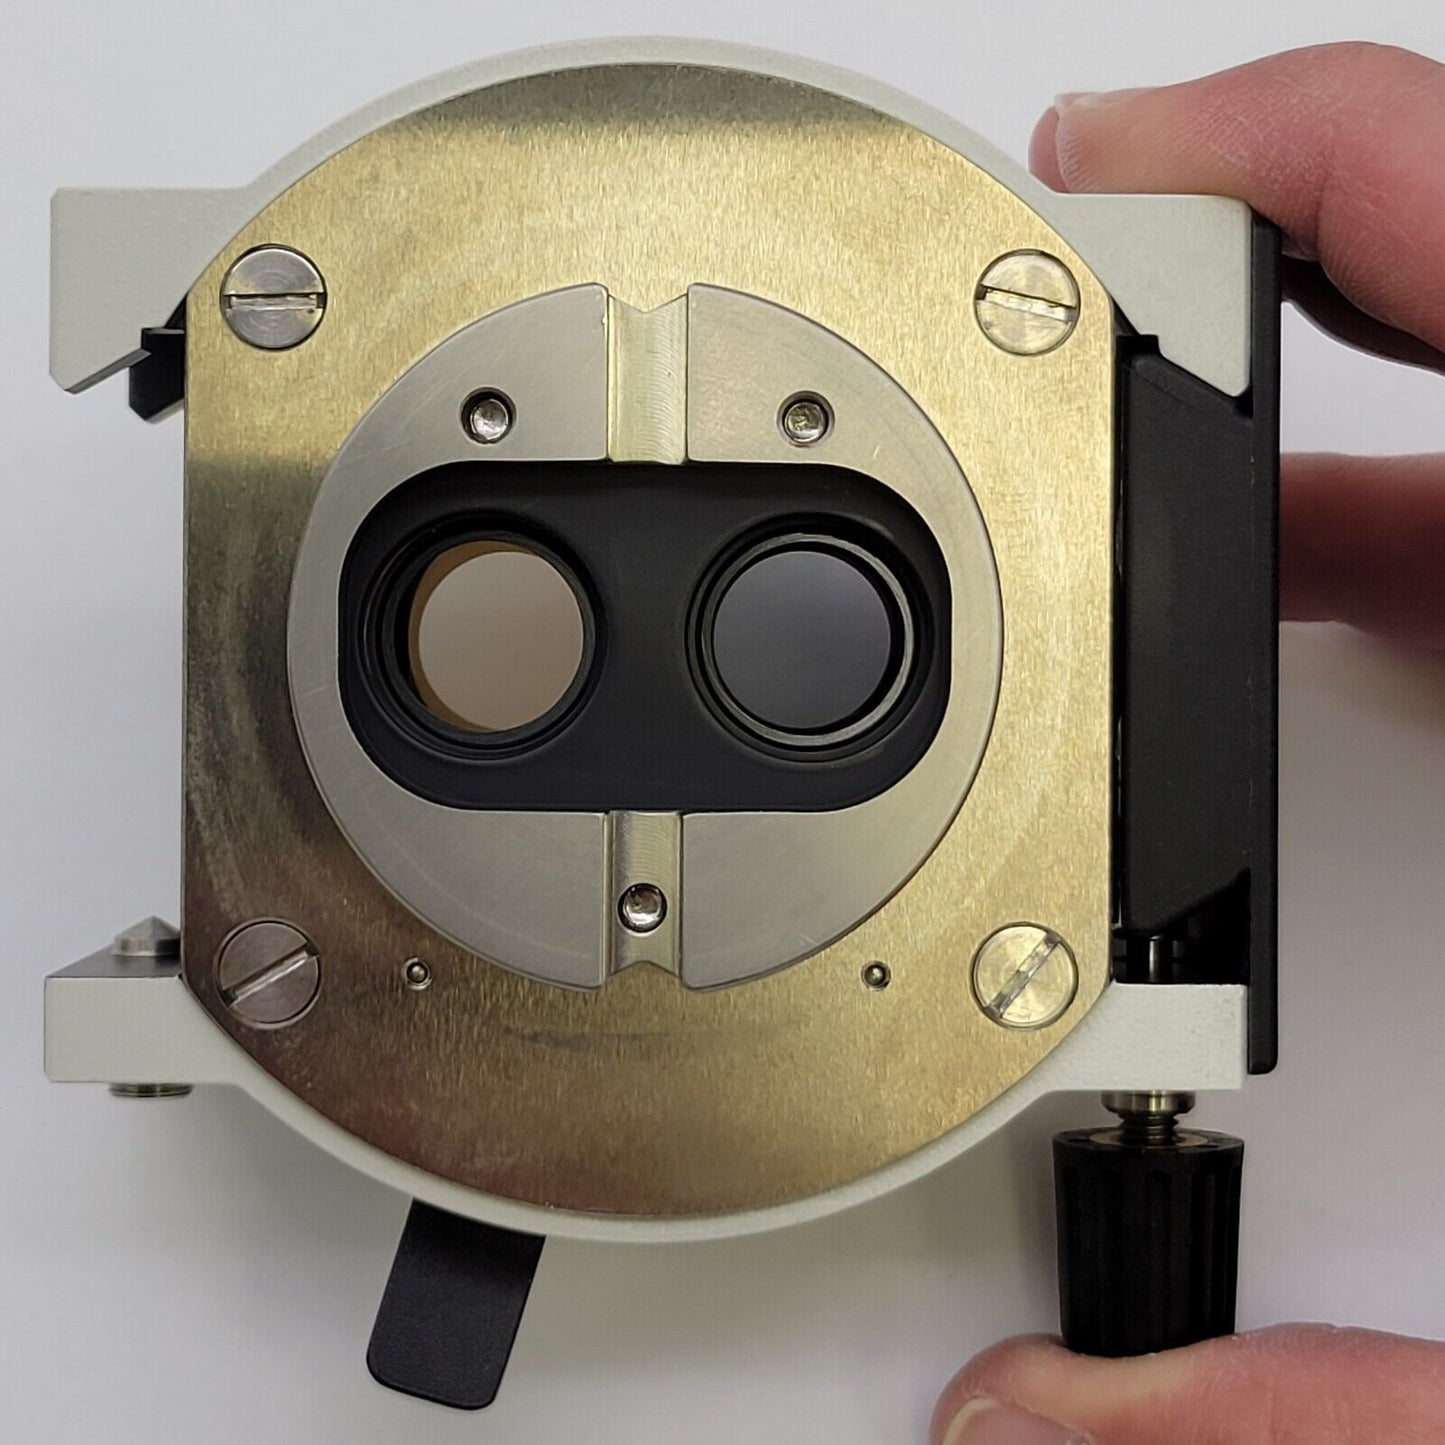 Leica Surgical Microscope Beam Splitter Vis 50% 10447266 - microscopemarketplace